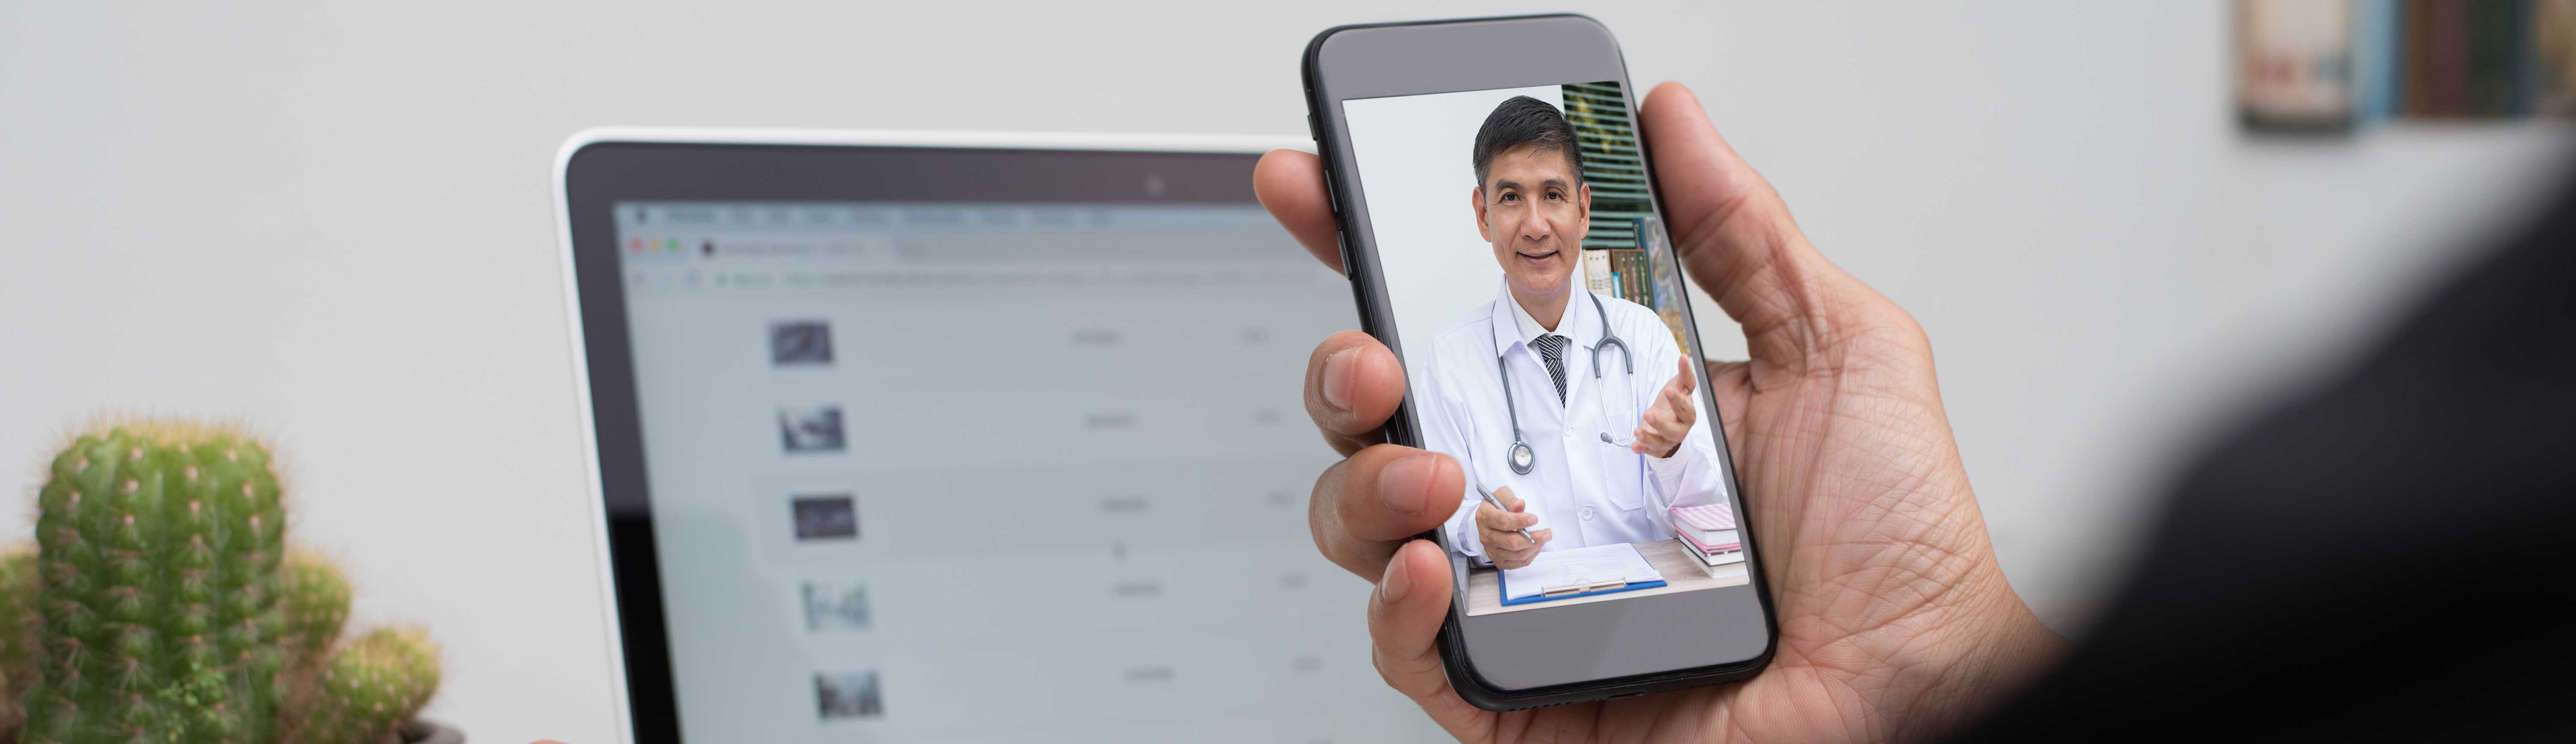 Virtual Clinic Smartphone Service.jpg